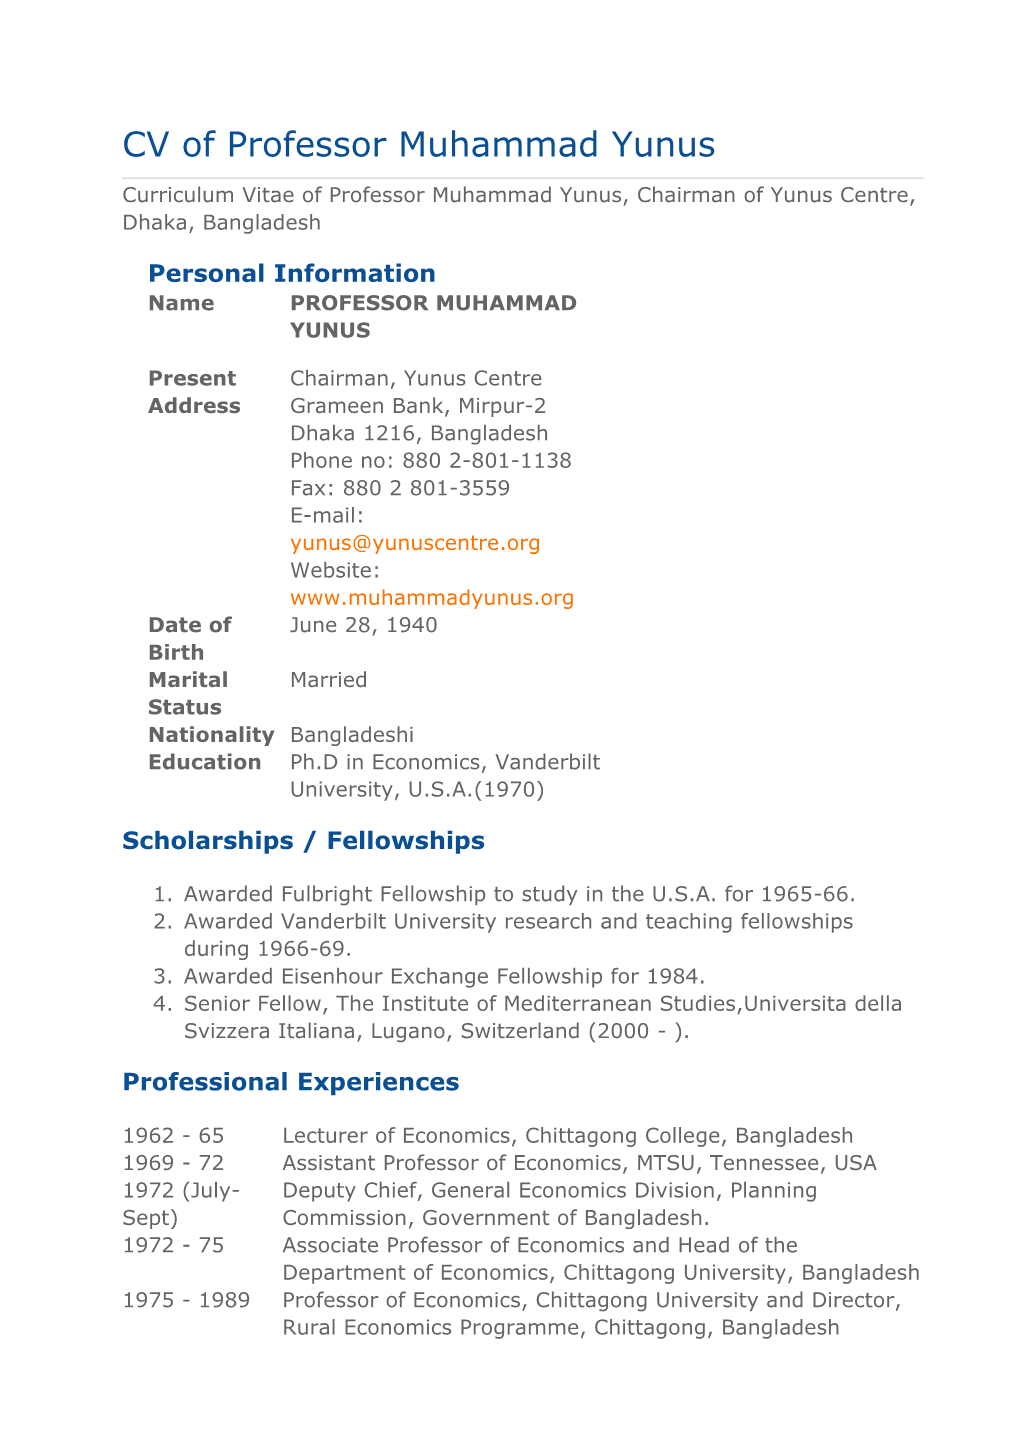 CV of Professor Muhammad Yunus